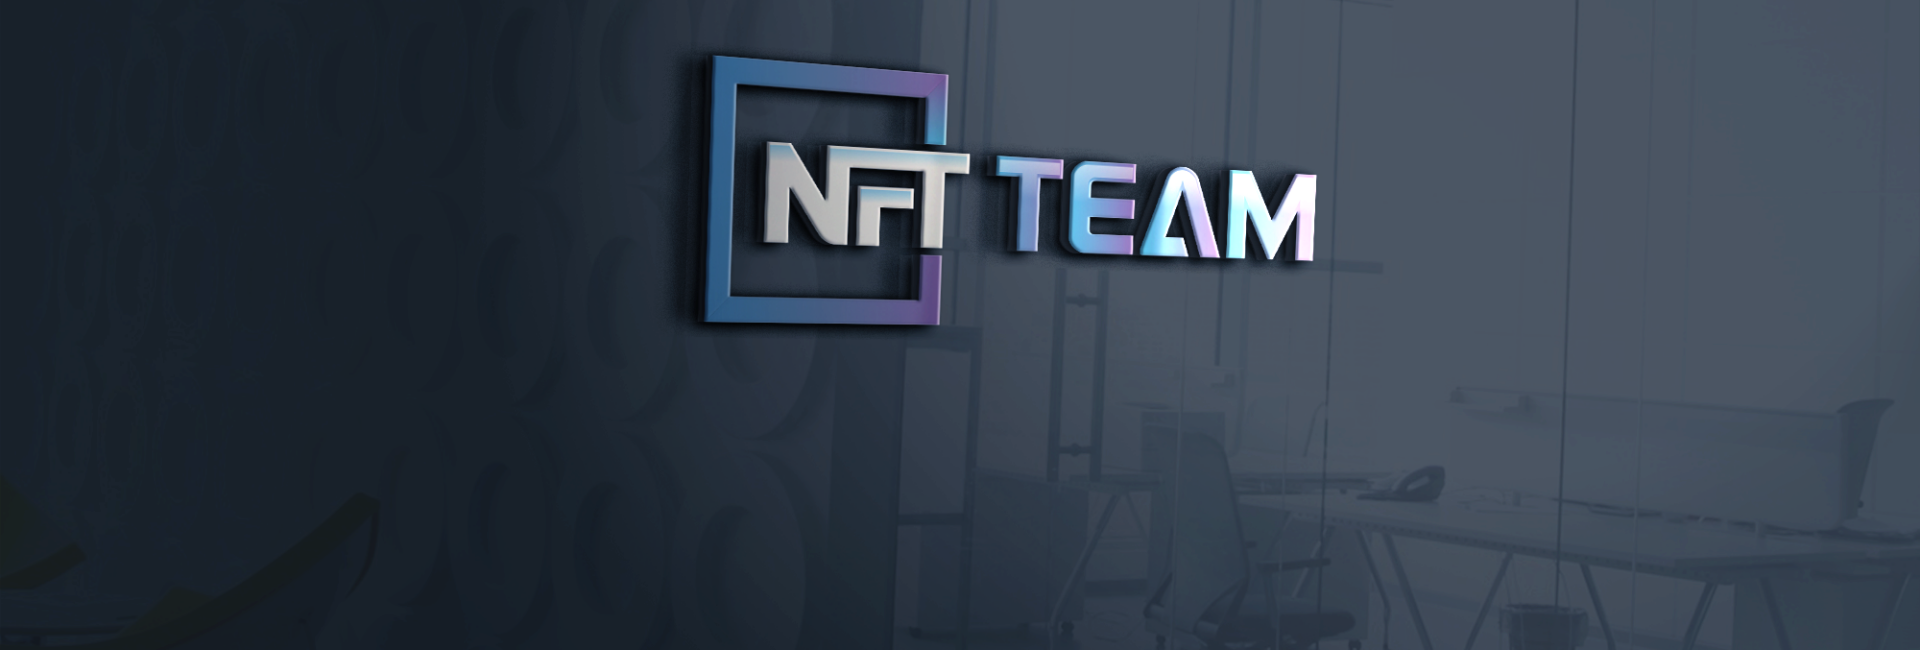 NFT Team nft advies en tips